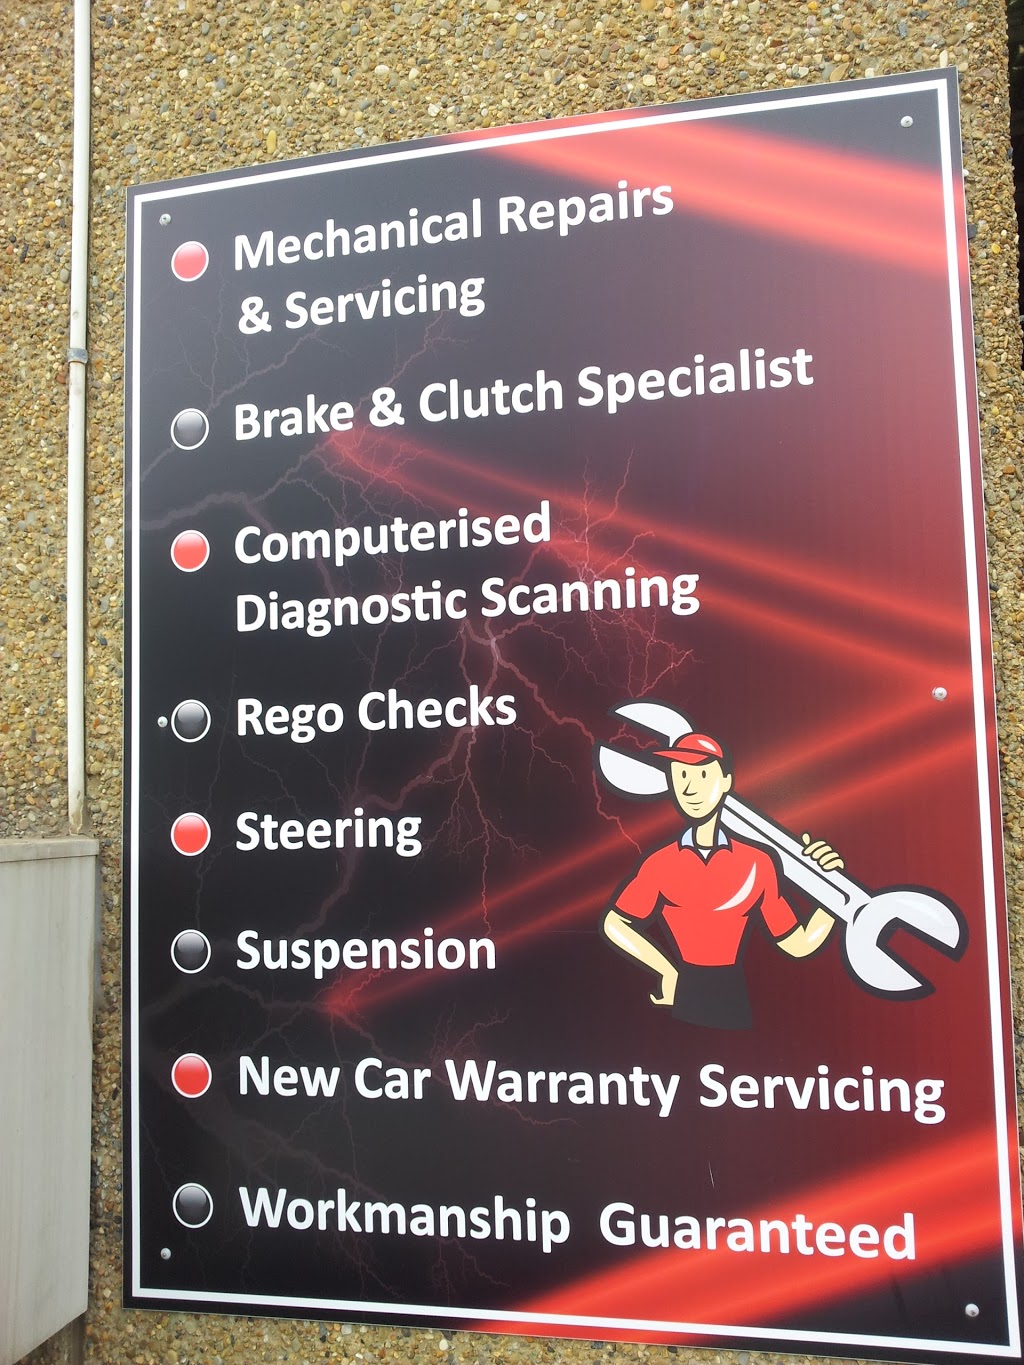 Hawkesbury Brake & Clutch | car repair | 2/124 Ham St, South Windsor NSW 2756, Australia | 0245773823 OR +61 2 4577 3823